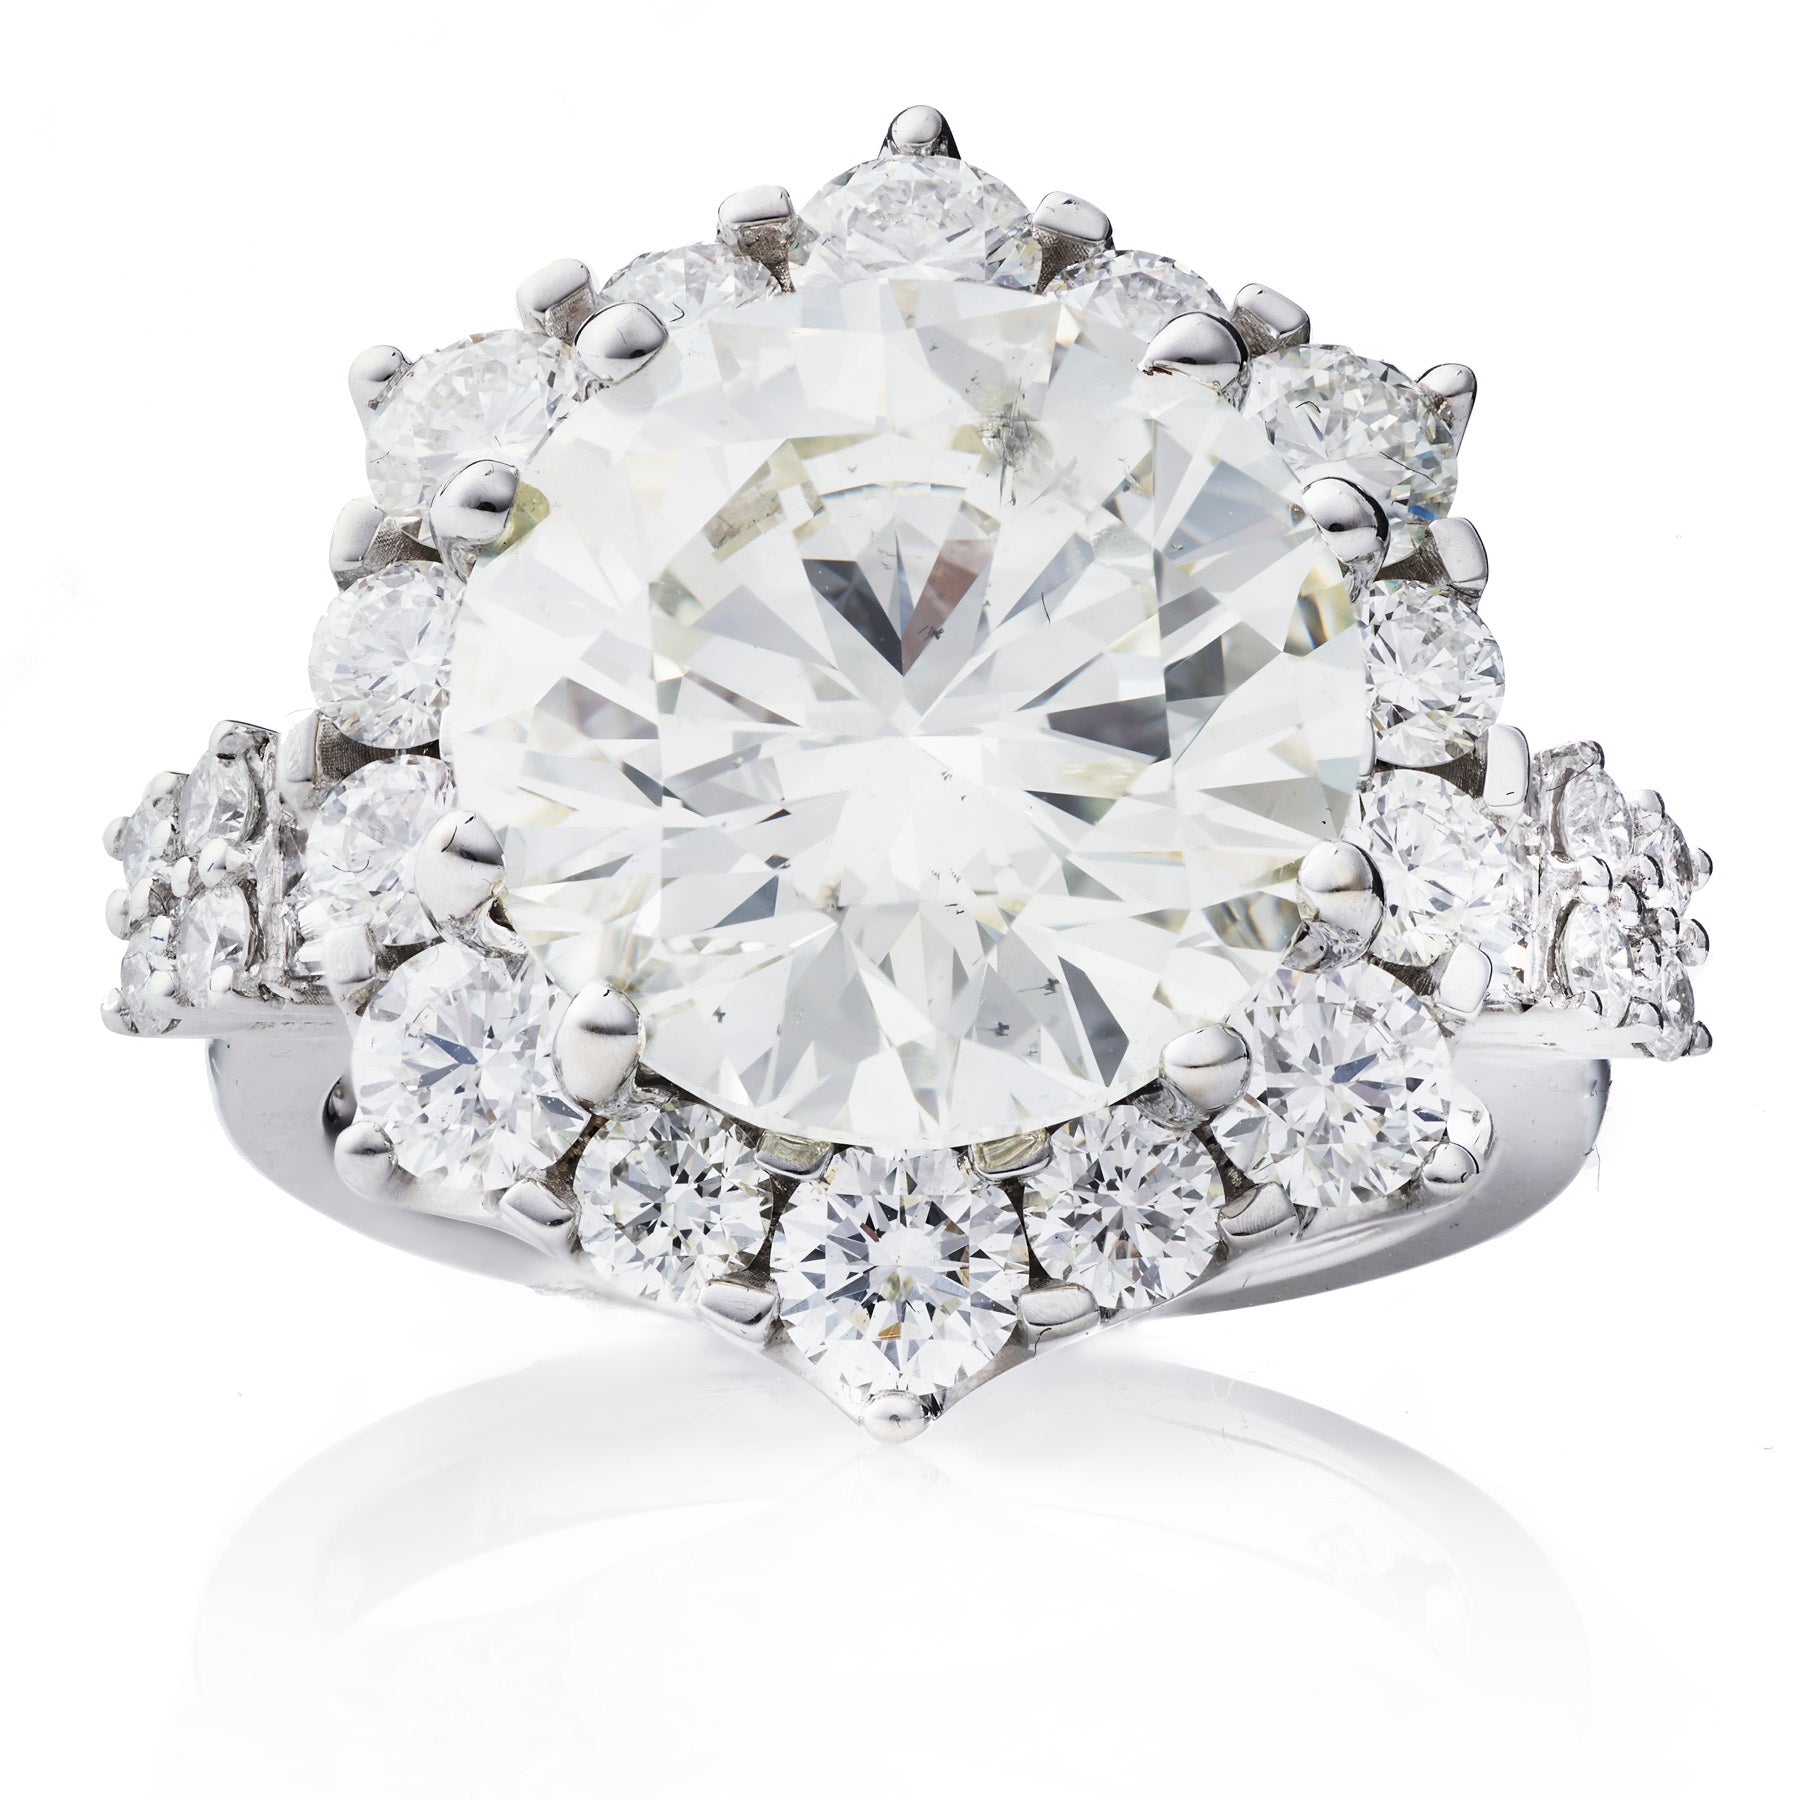 Custom-Made 8 carat Diamond Ring in 18k White Gold